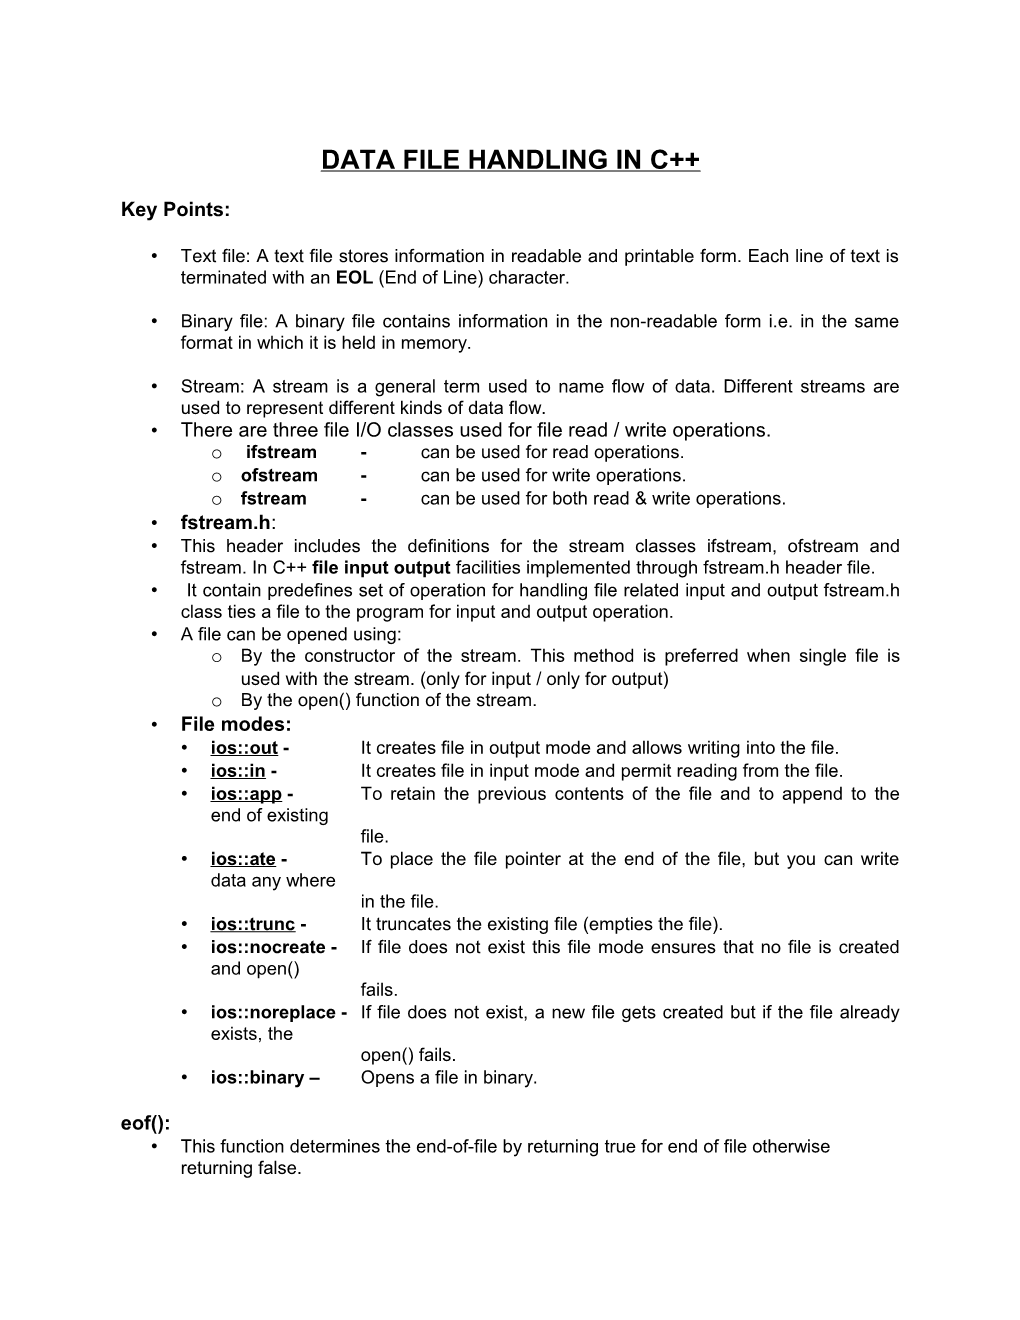 Data File Handling in C